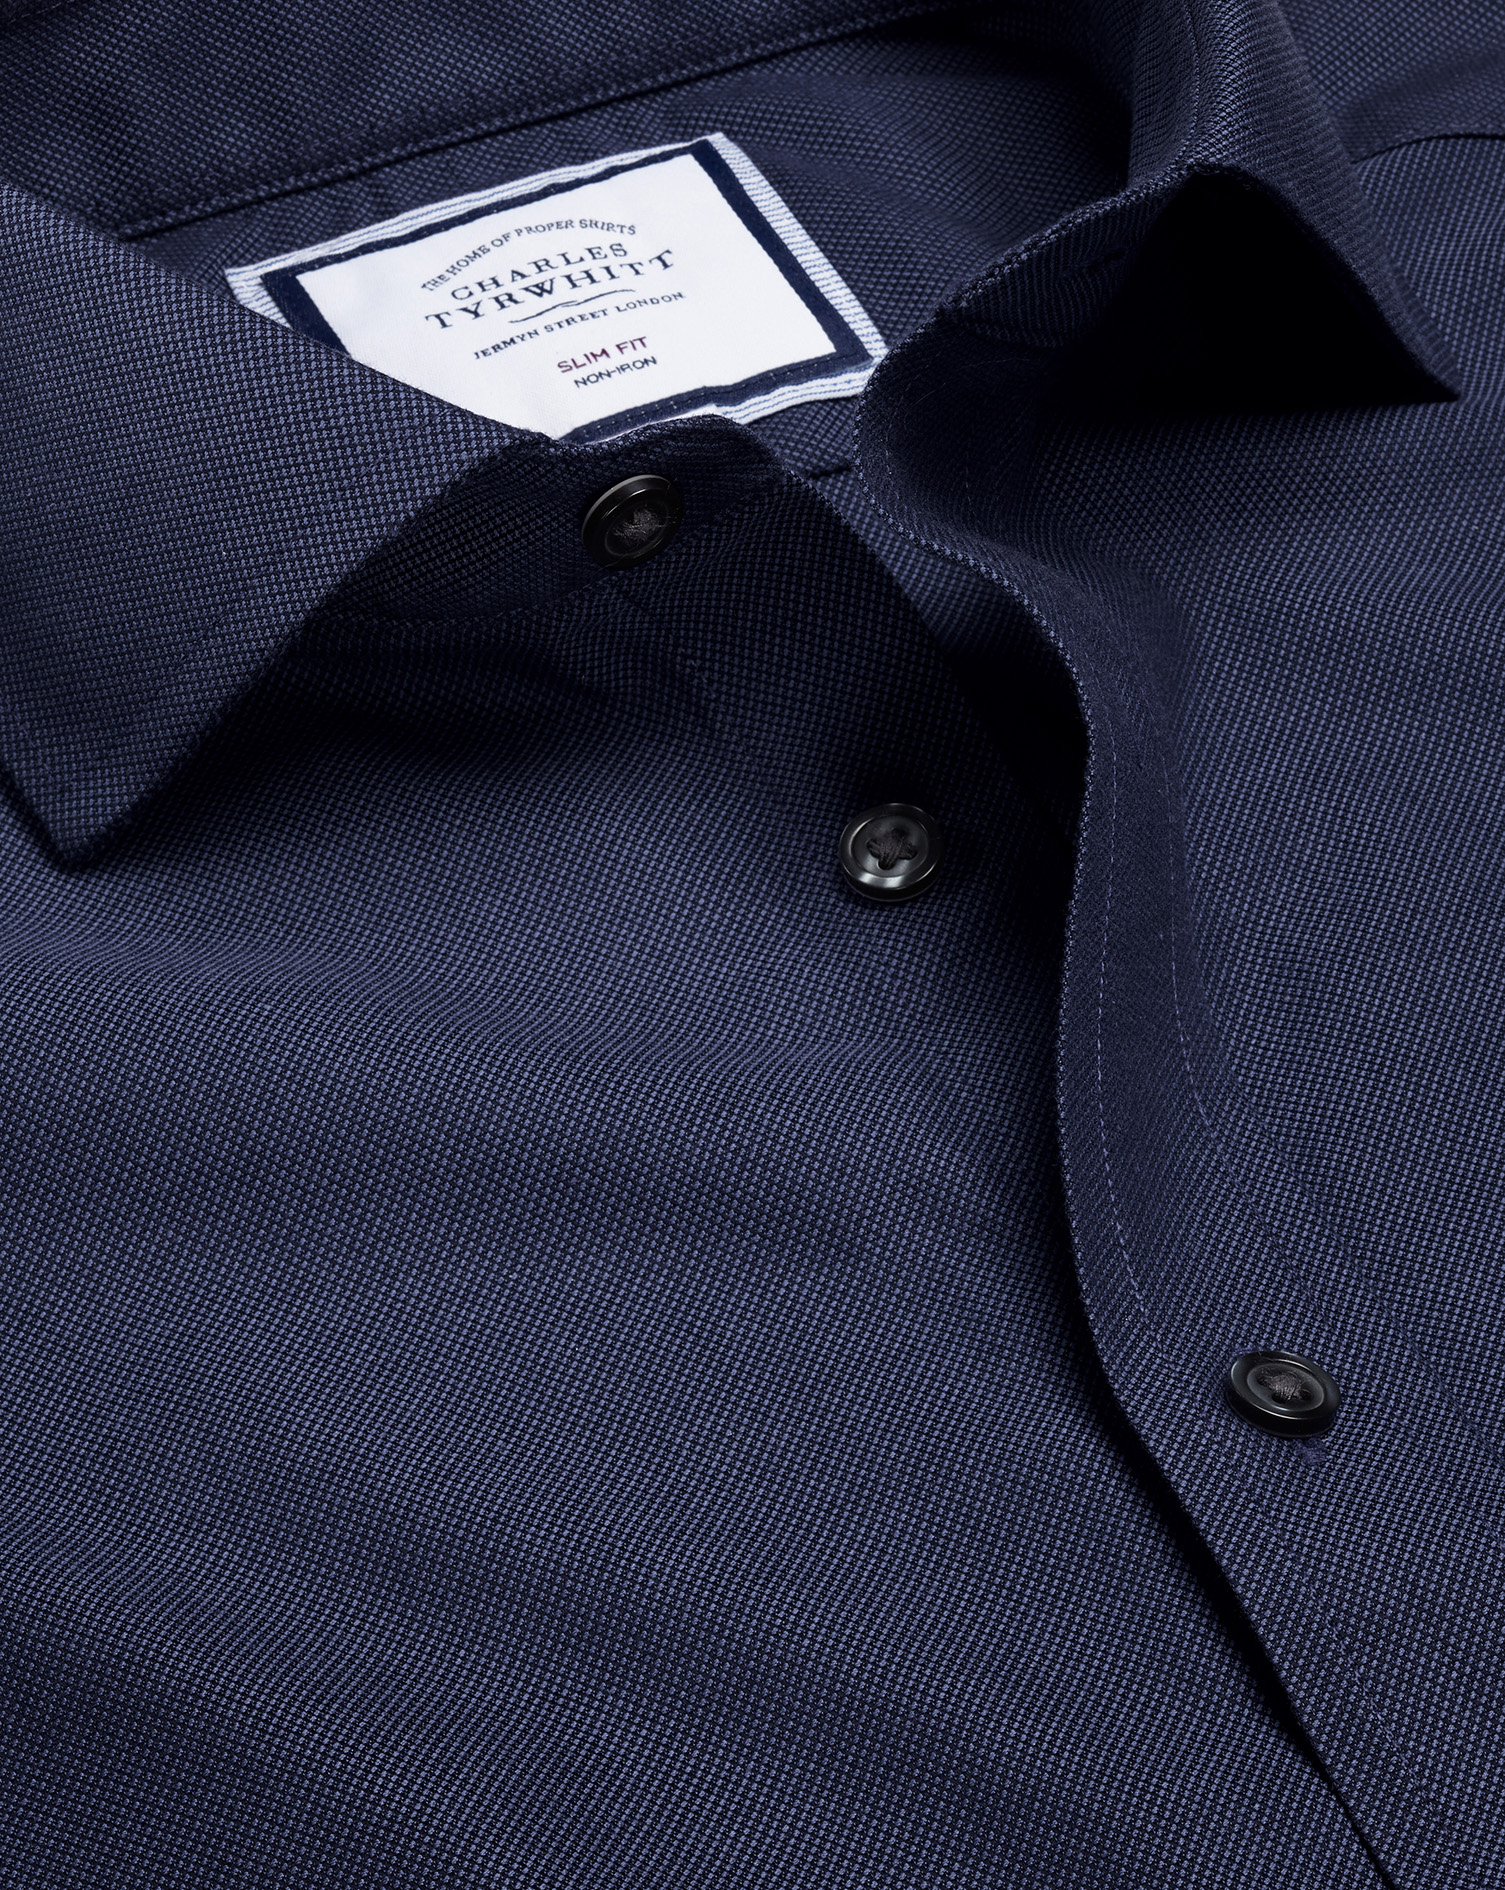 Men's Charles Tyrwhitt Cutaway Collar Non-Iron Royal Oxford Dress Shirt - French Blue French Cuff Si